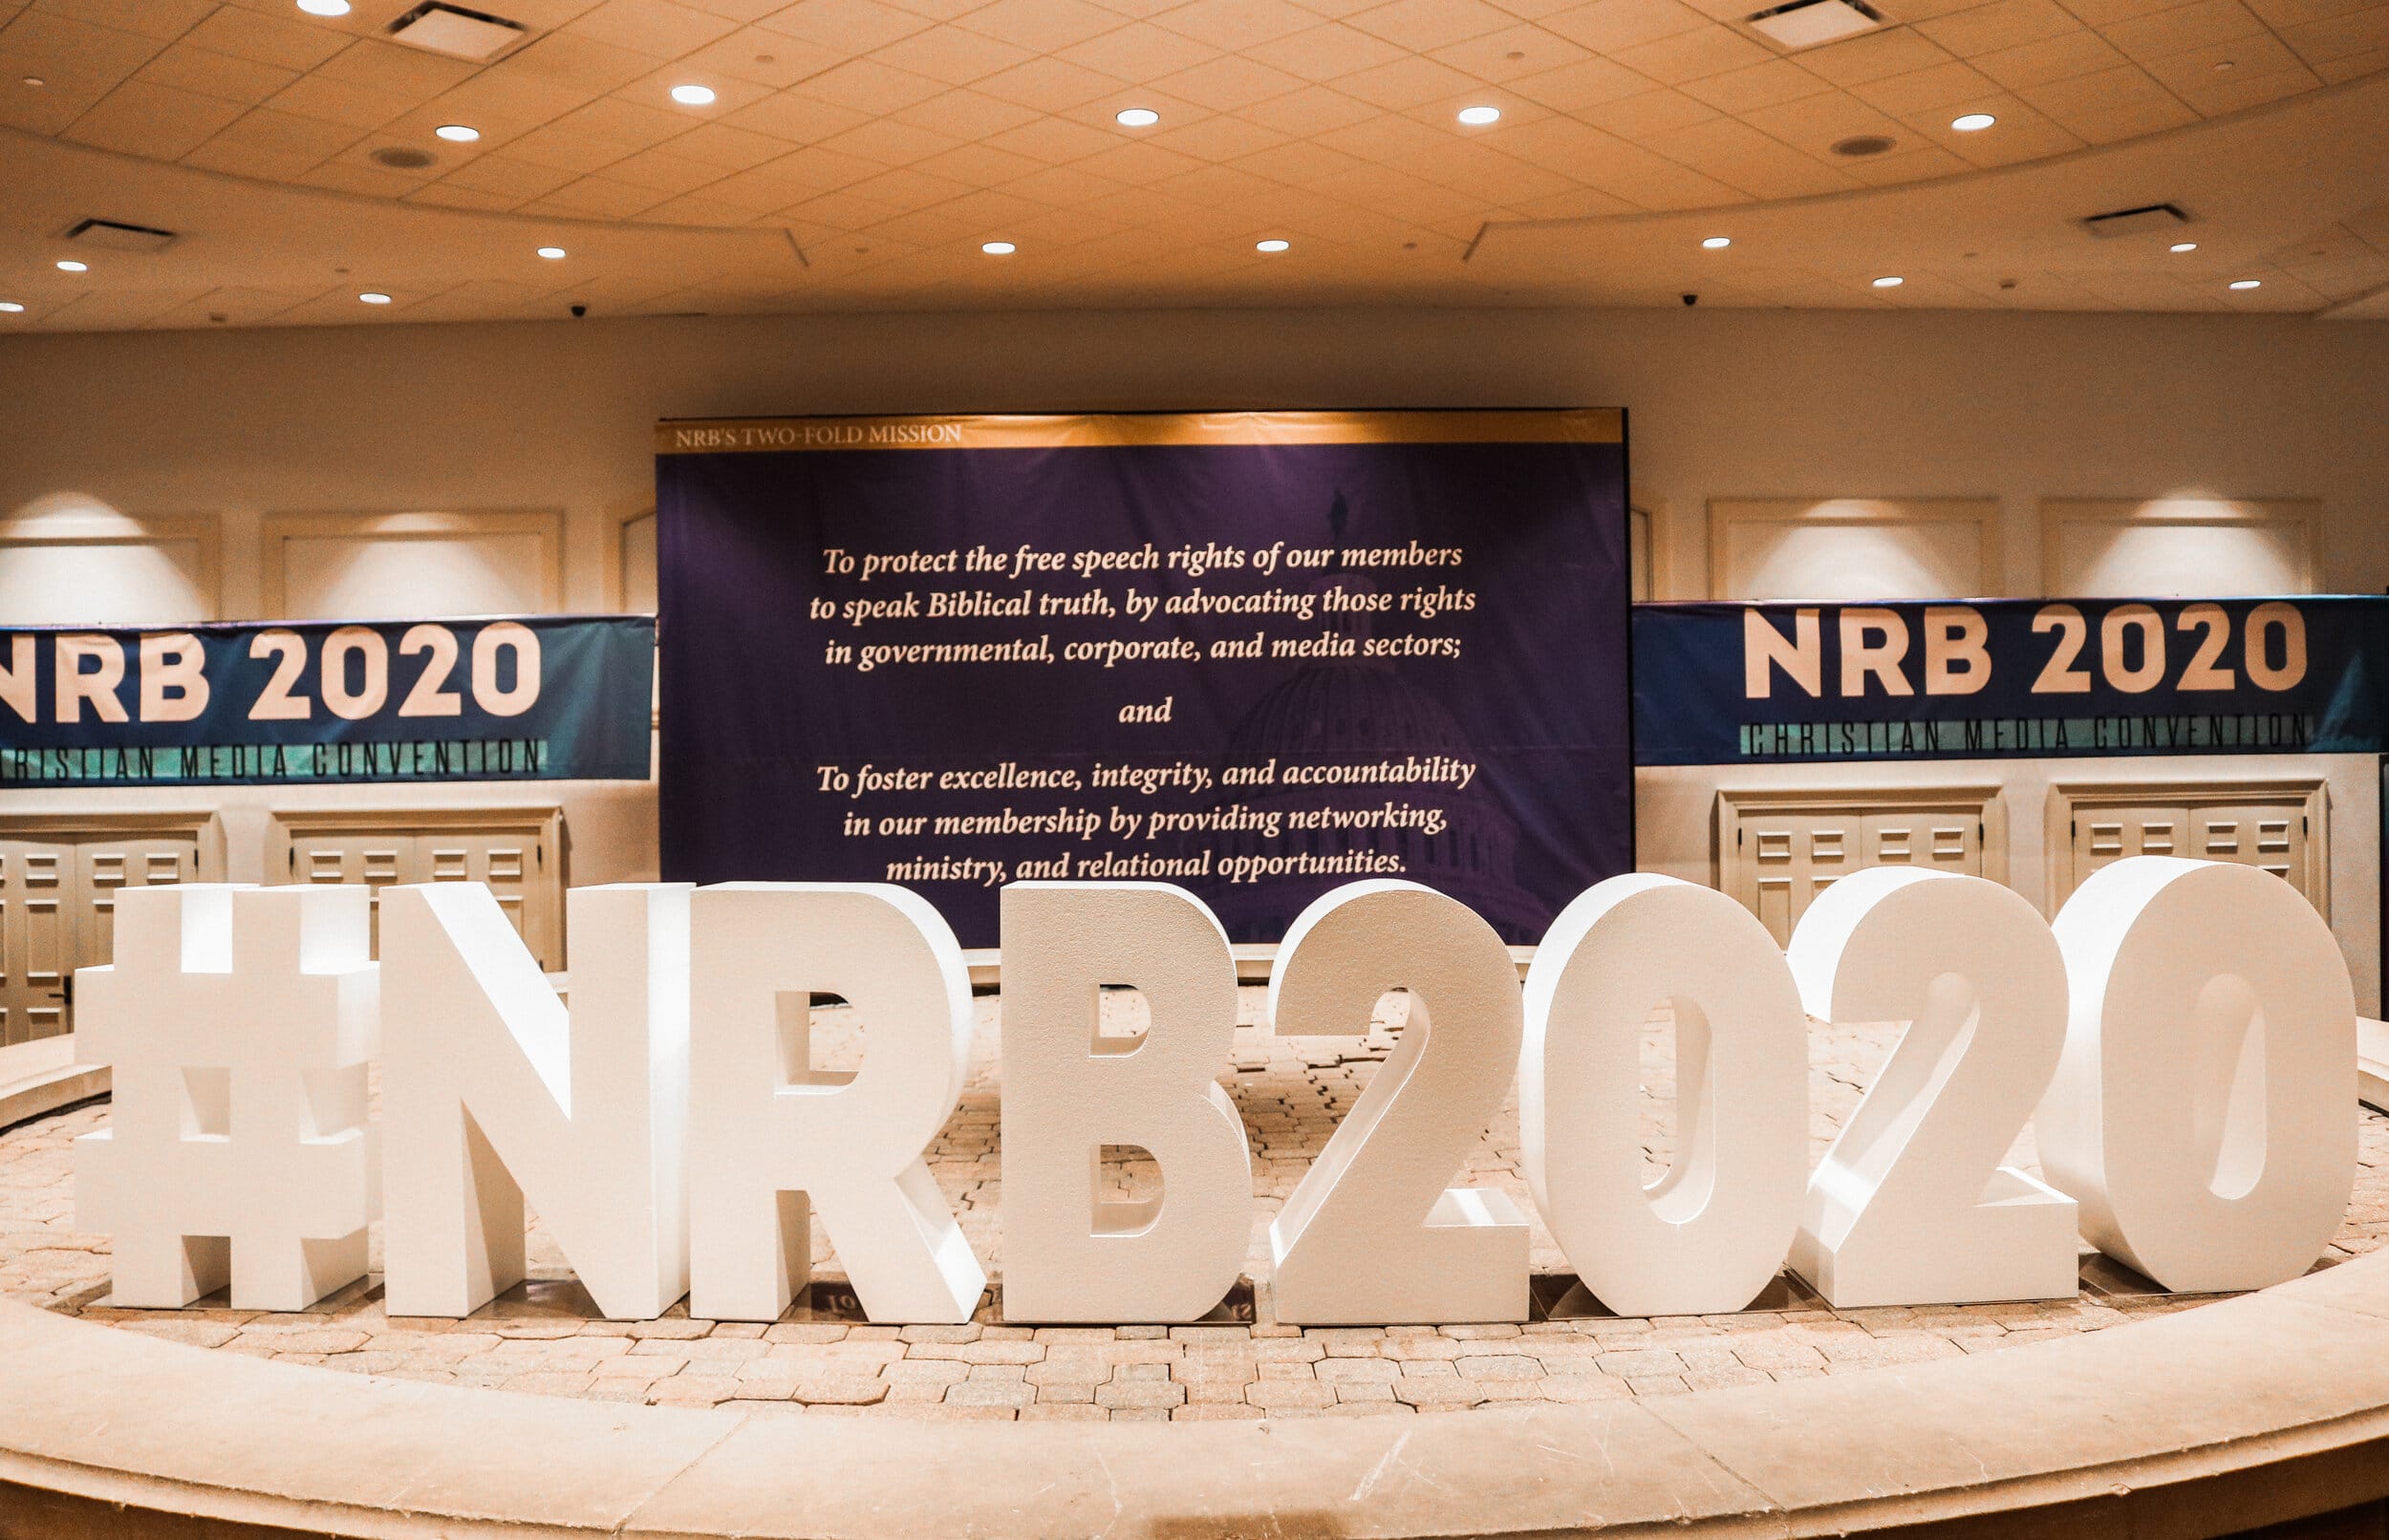 NRB 2020 block letters in lobby.